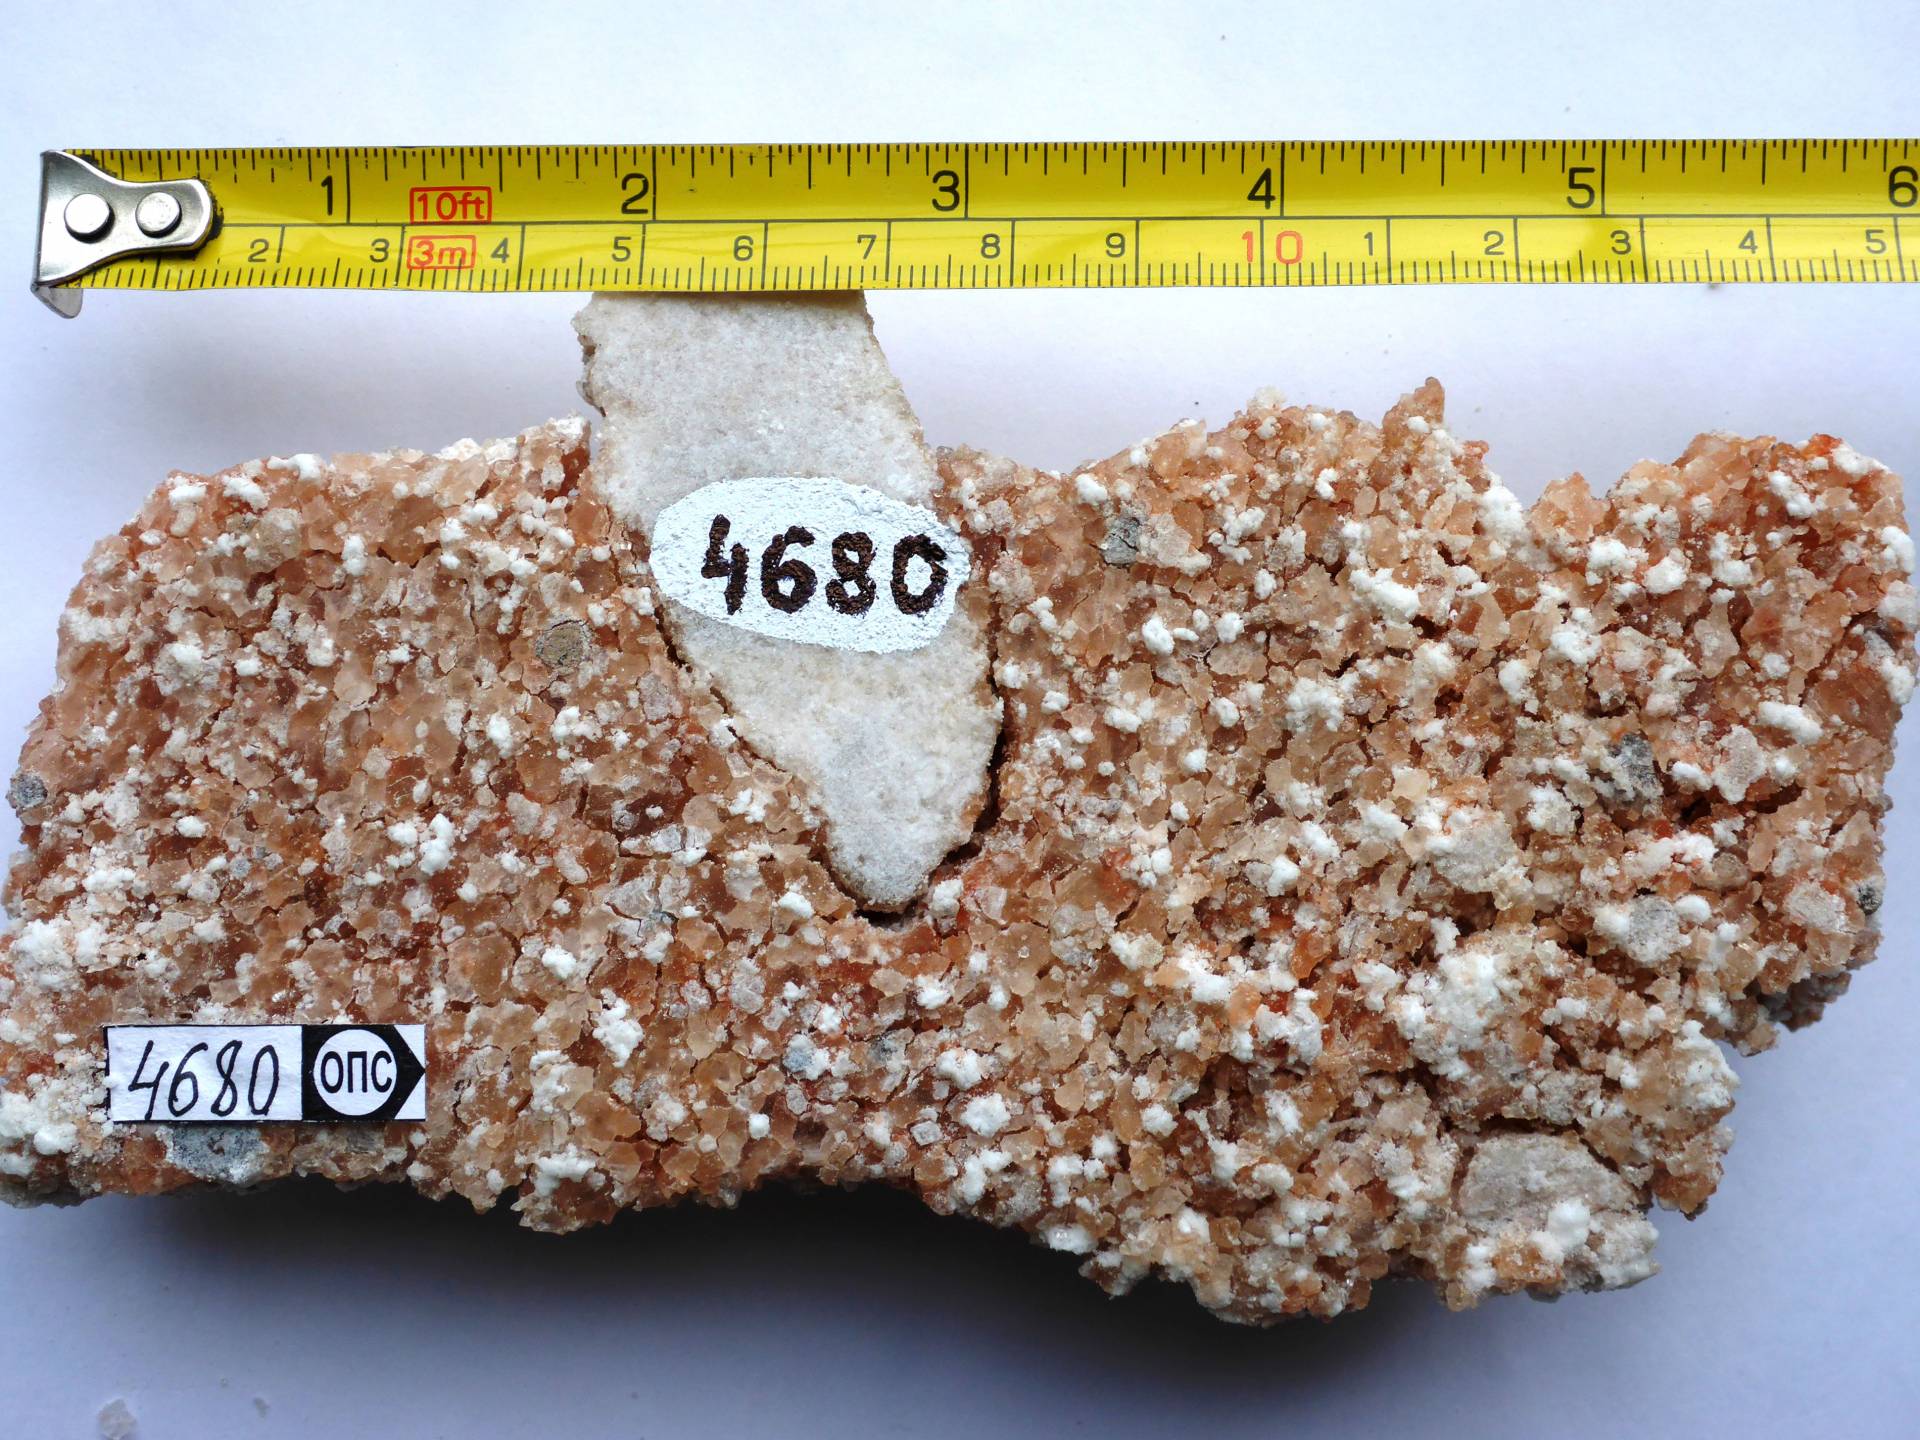 2-billion-year-old salt